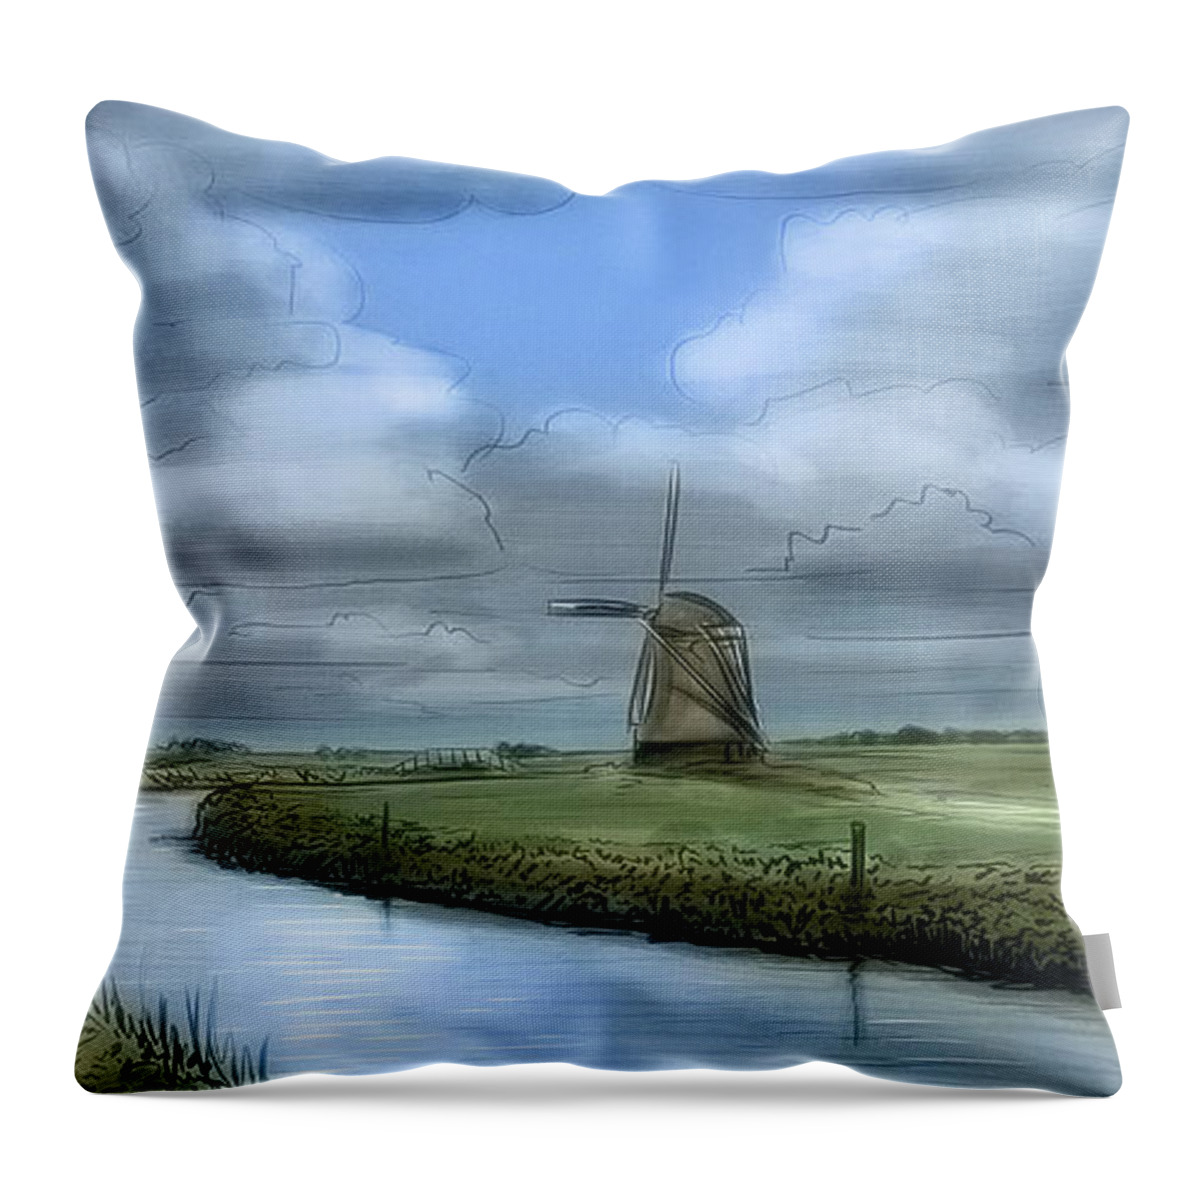 Holland Throw Pillow featuring the digital art Art - This Is Holland by Matthias Zegveld